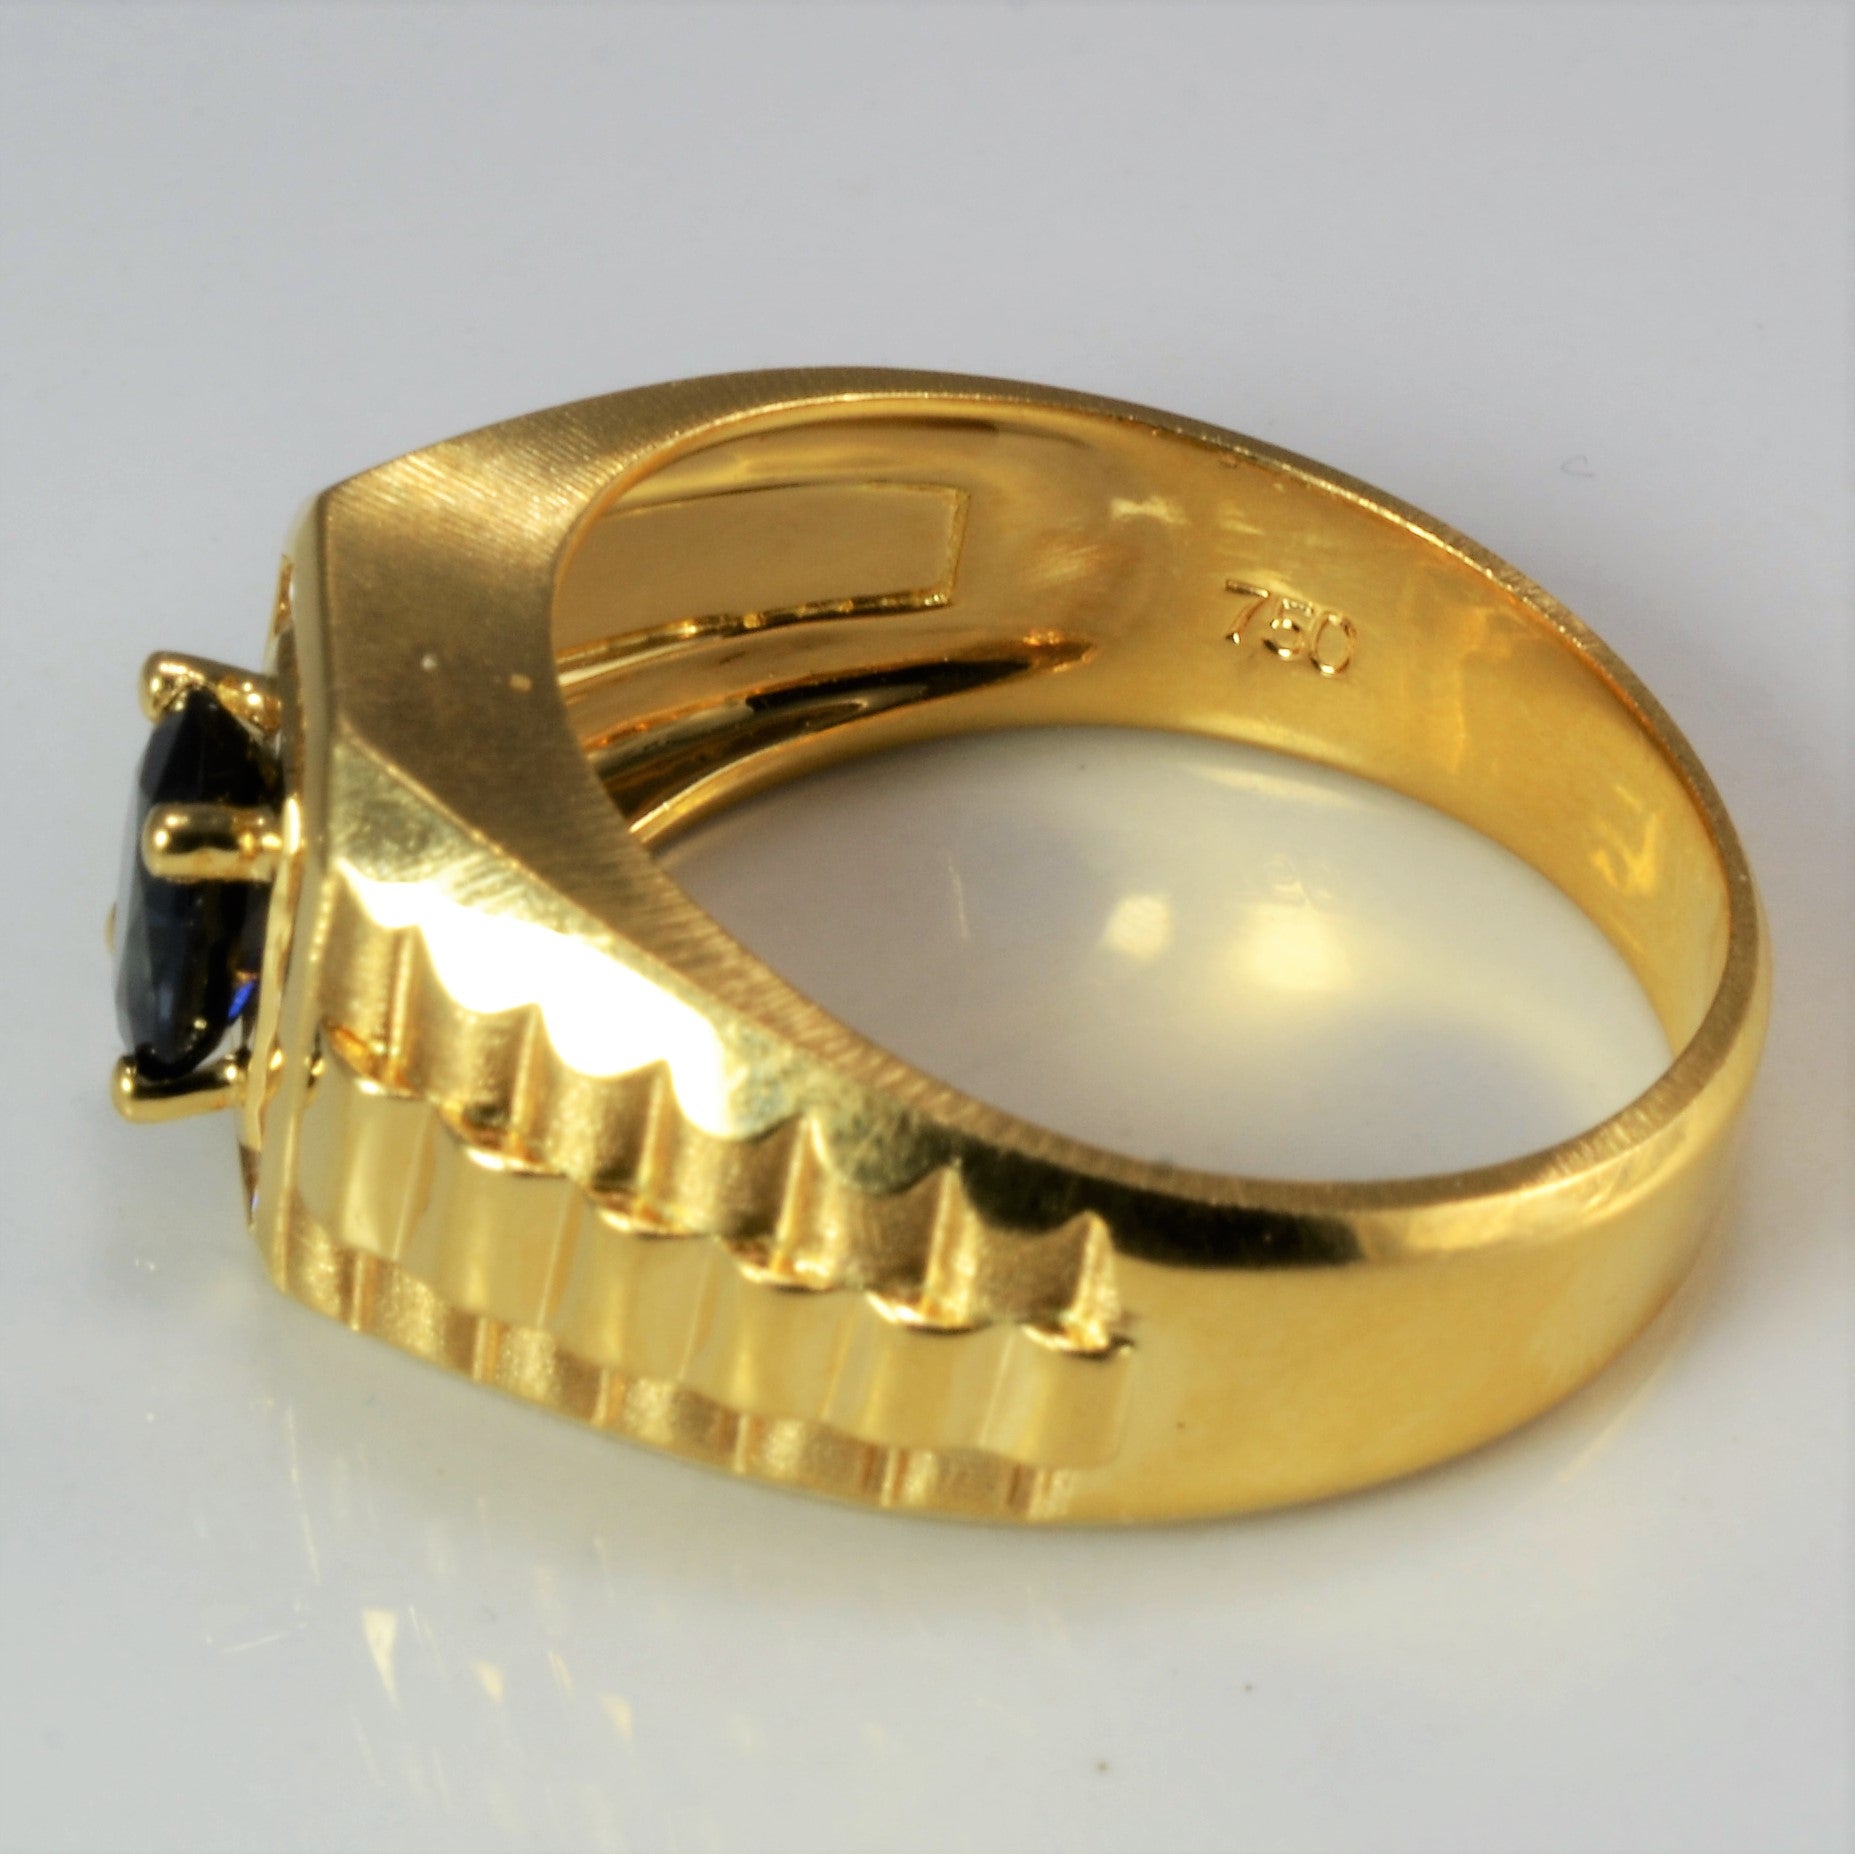 Textured Sapphire & Diamond Men's Ring | 0.22 ctw, SZ 9.75 |